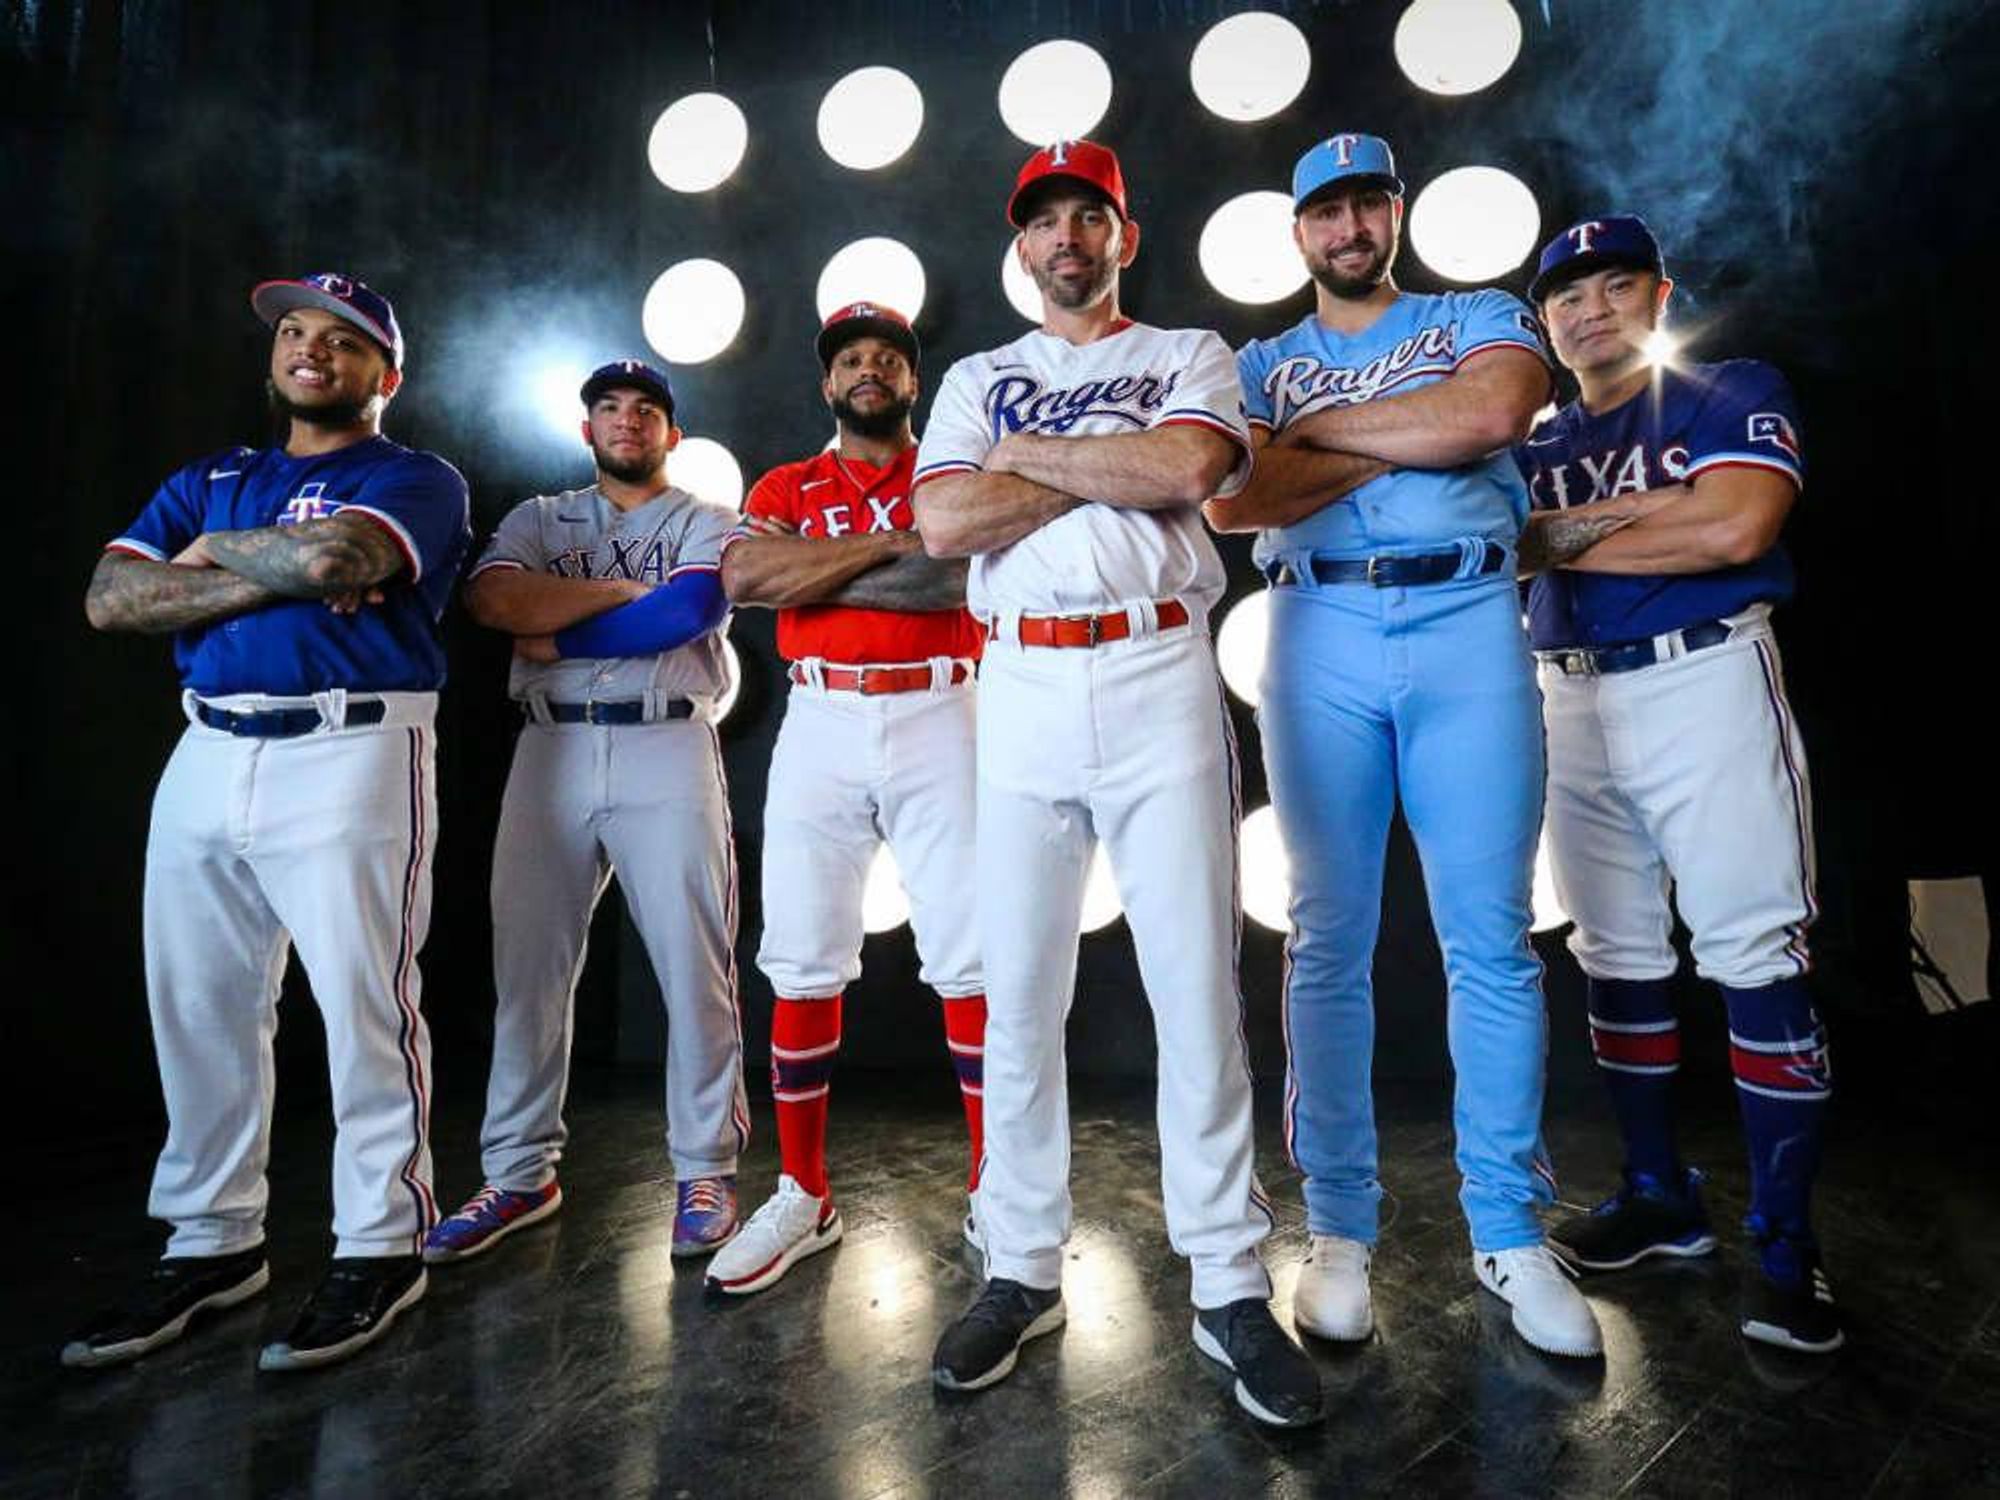 Texas Rangers uniforms